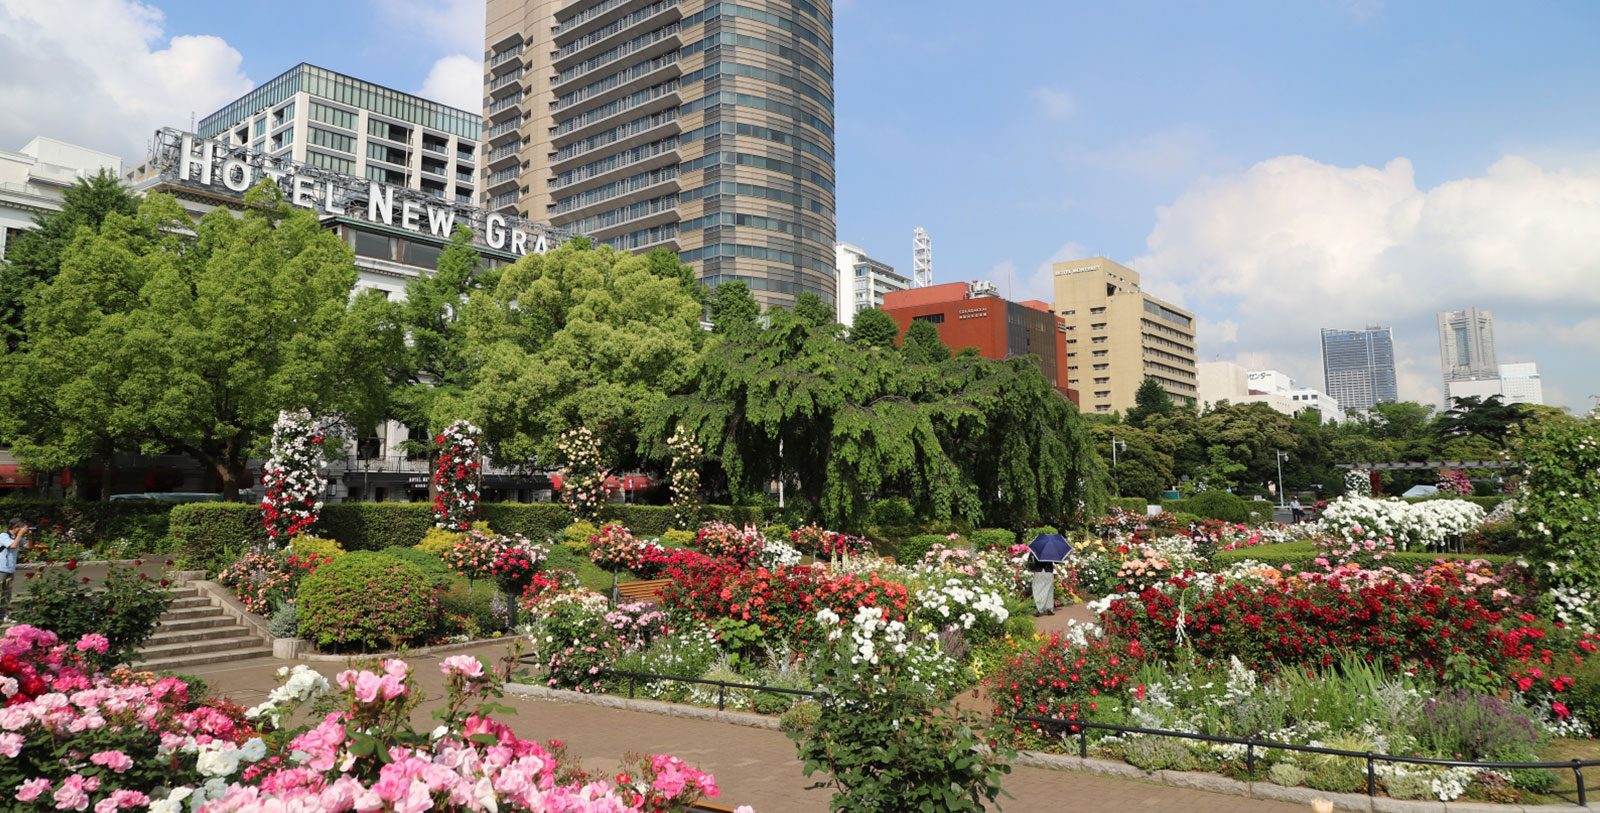 Explore the Yokohama Daisekai, the Yokohama Marine Tower, and Yamashita Park steps away.